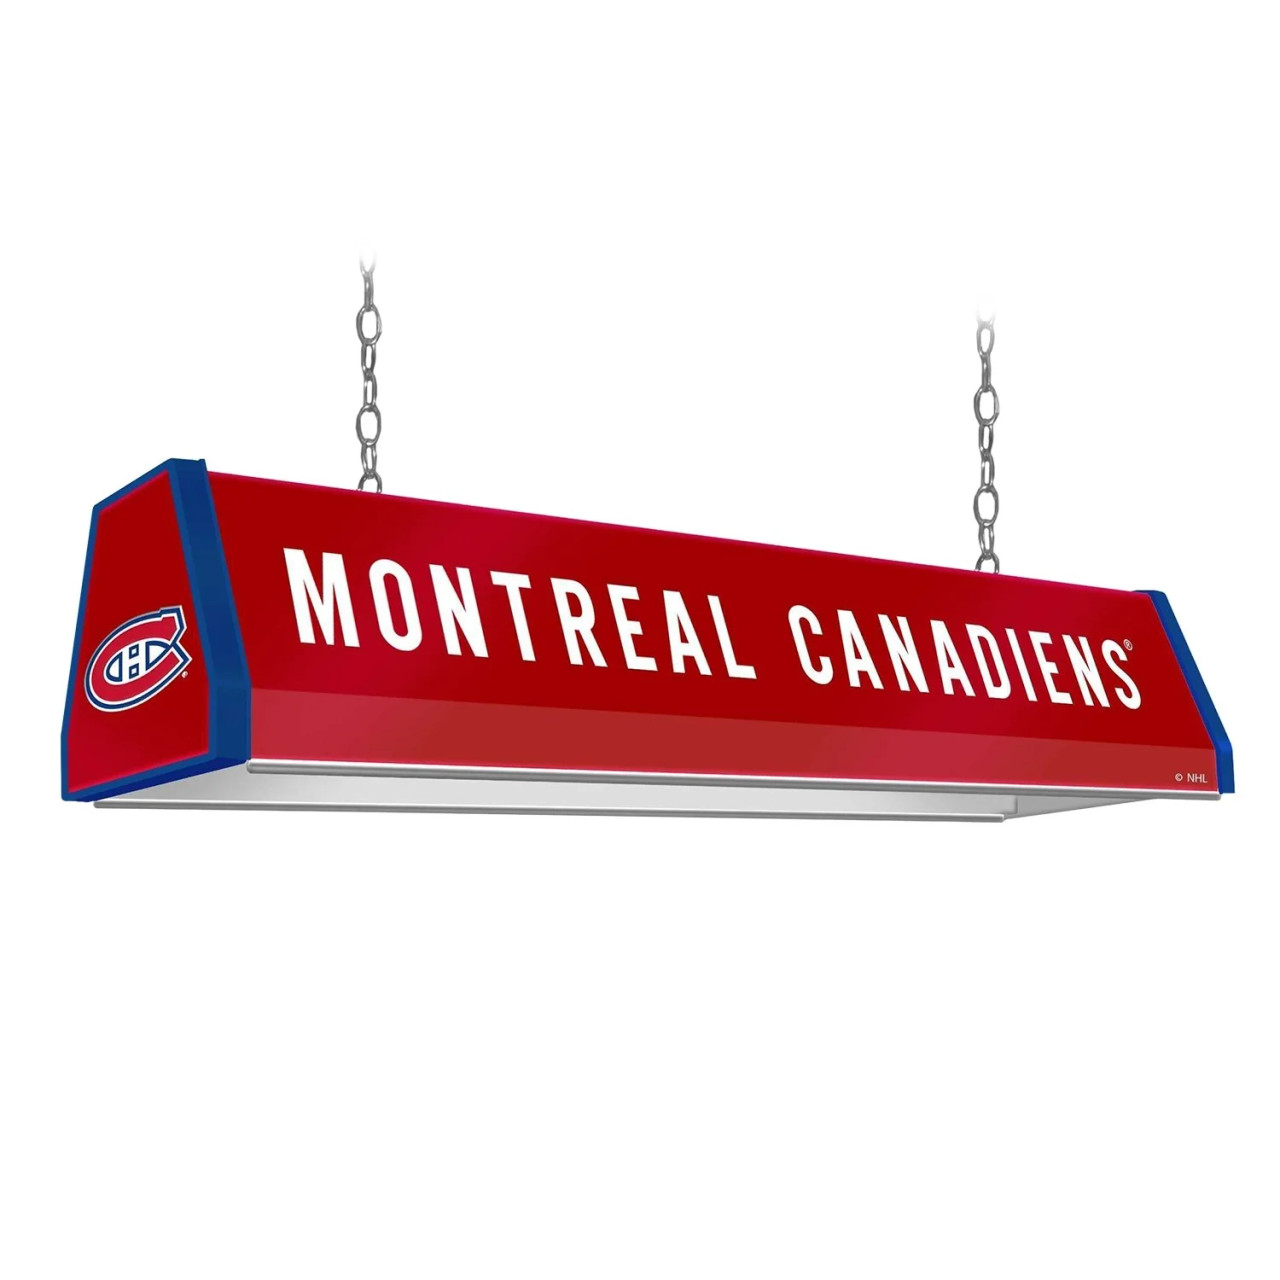 Montreal, Mon, Canadiens, Canadians, Standard, Pool, Billiard, Table, Light, NHMONC-310-01, The Fan-Brand, NHL, 686082113670